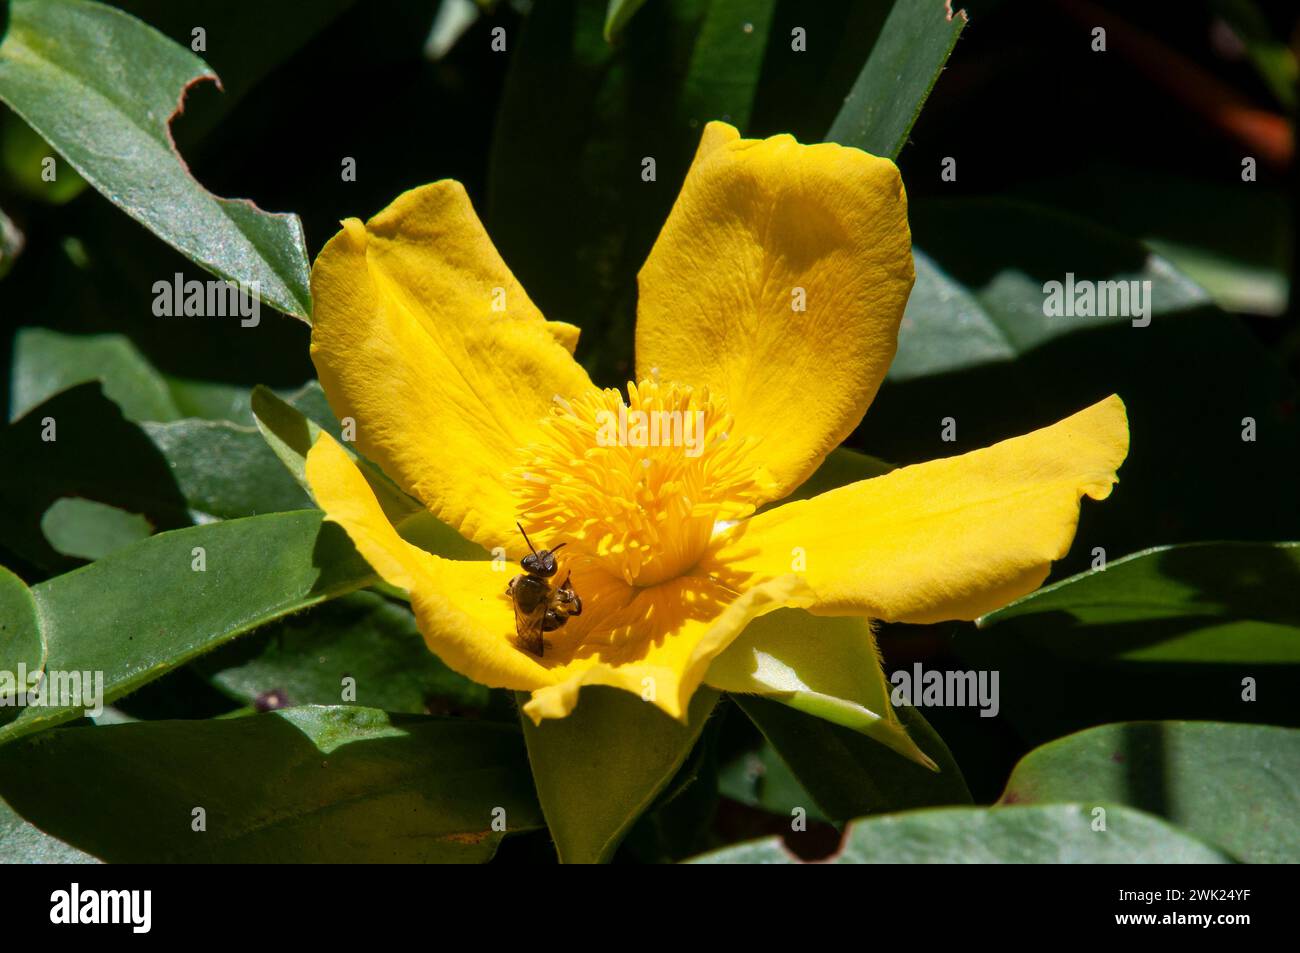 Sydney Australia, insect on bright yellow flower of hibbertia scandens or snake vine Stock Photo